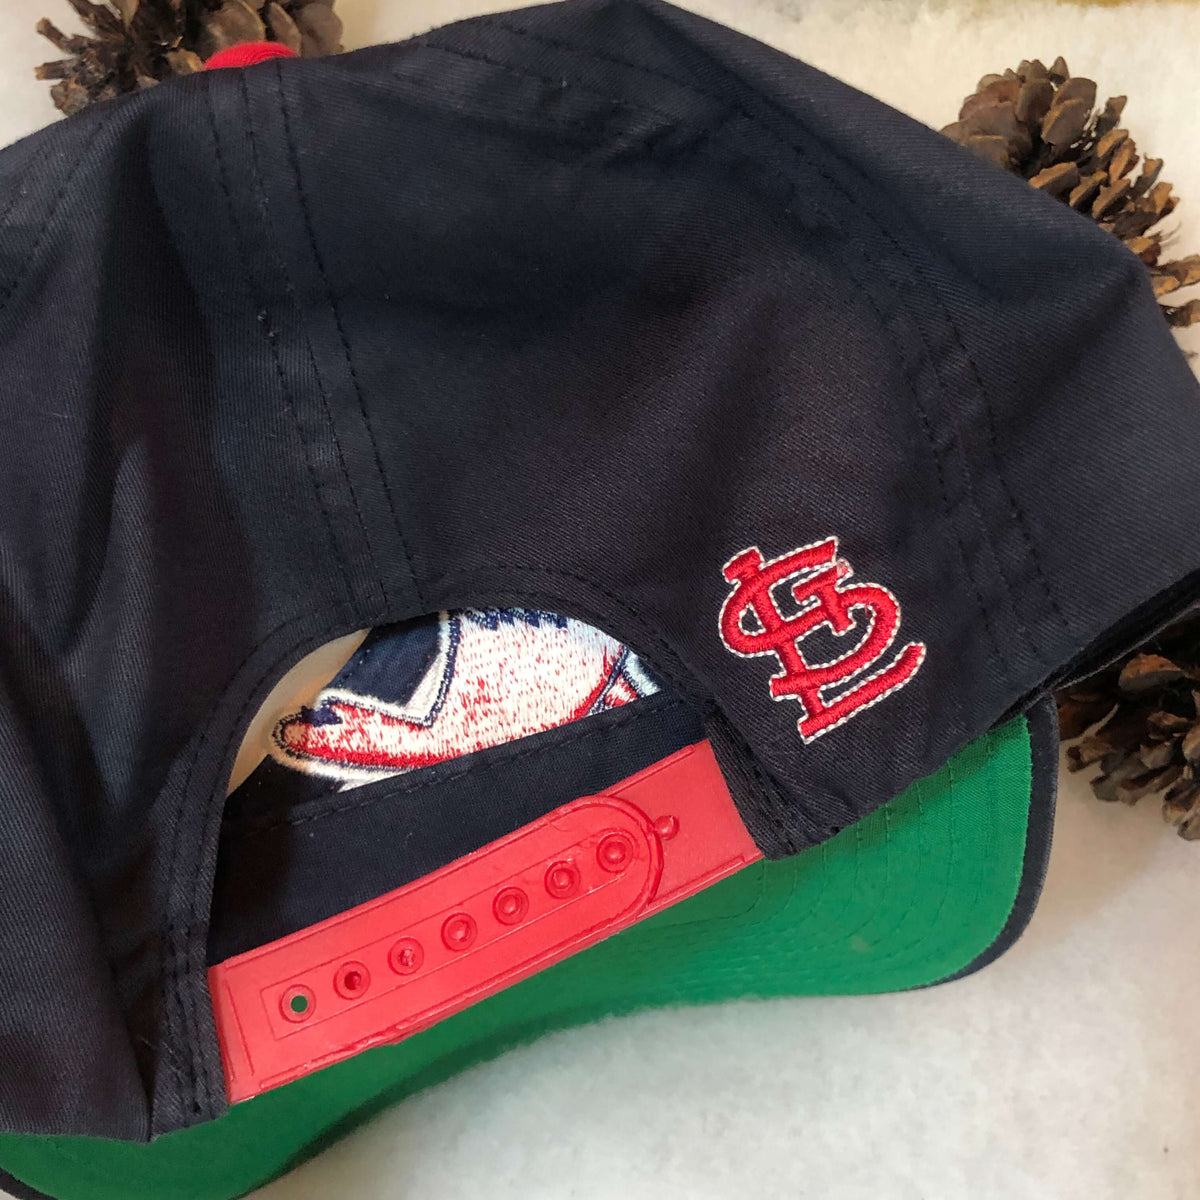 Vintage MLB St. Louis Cardinals Twins Enterprise Swirl Snapback